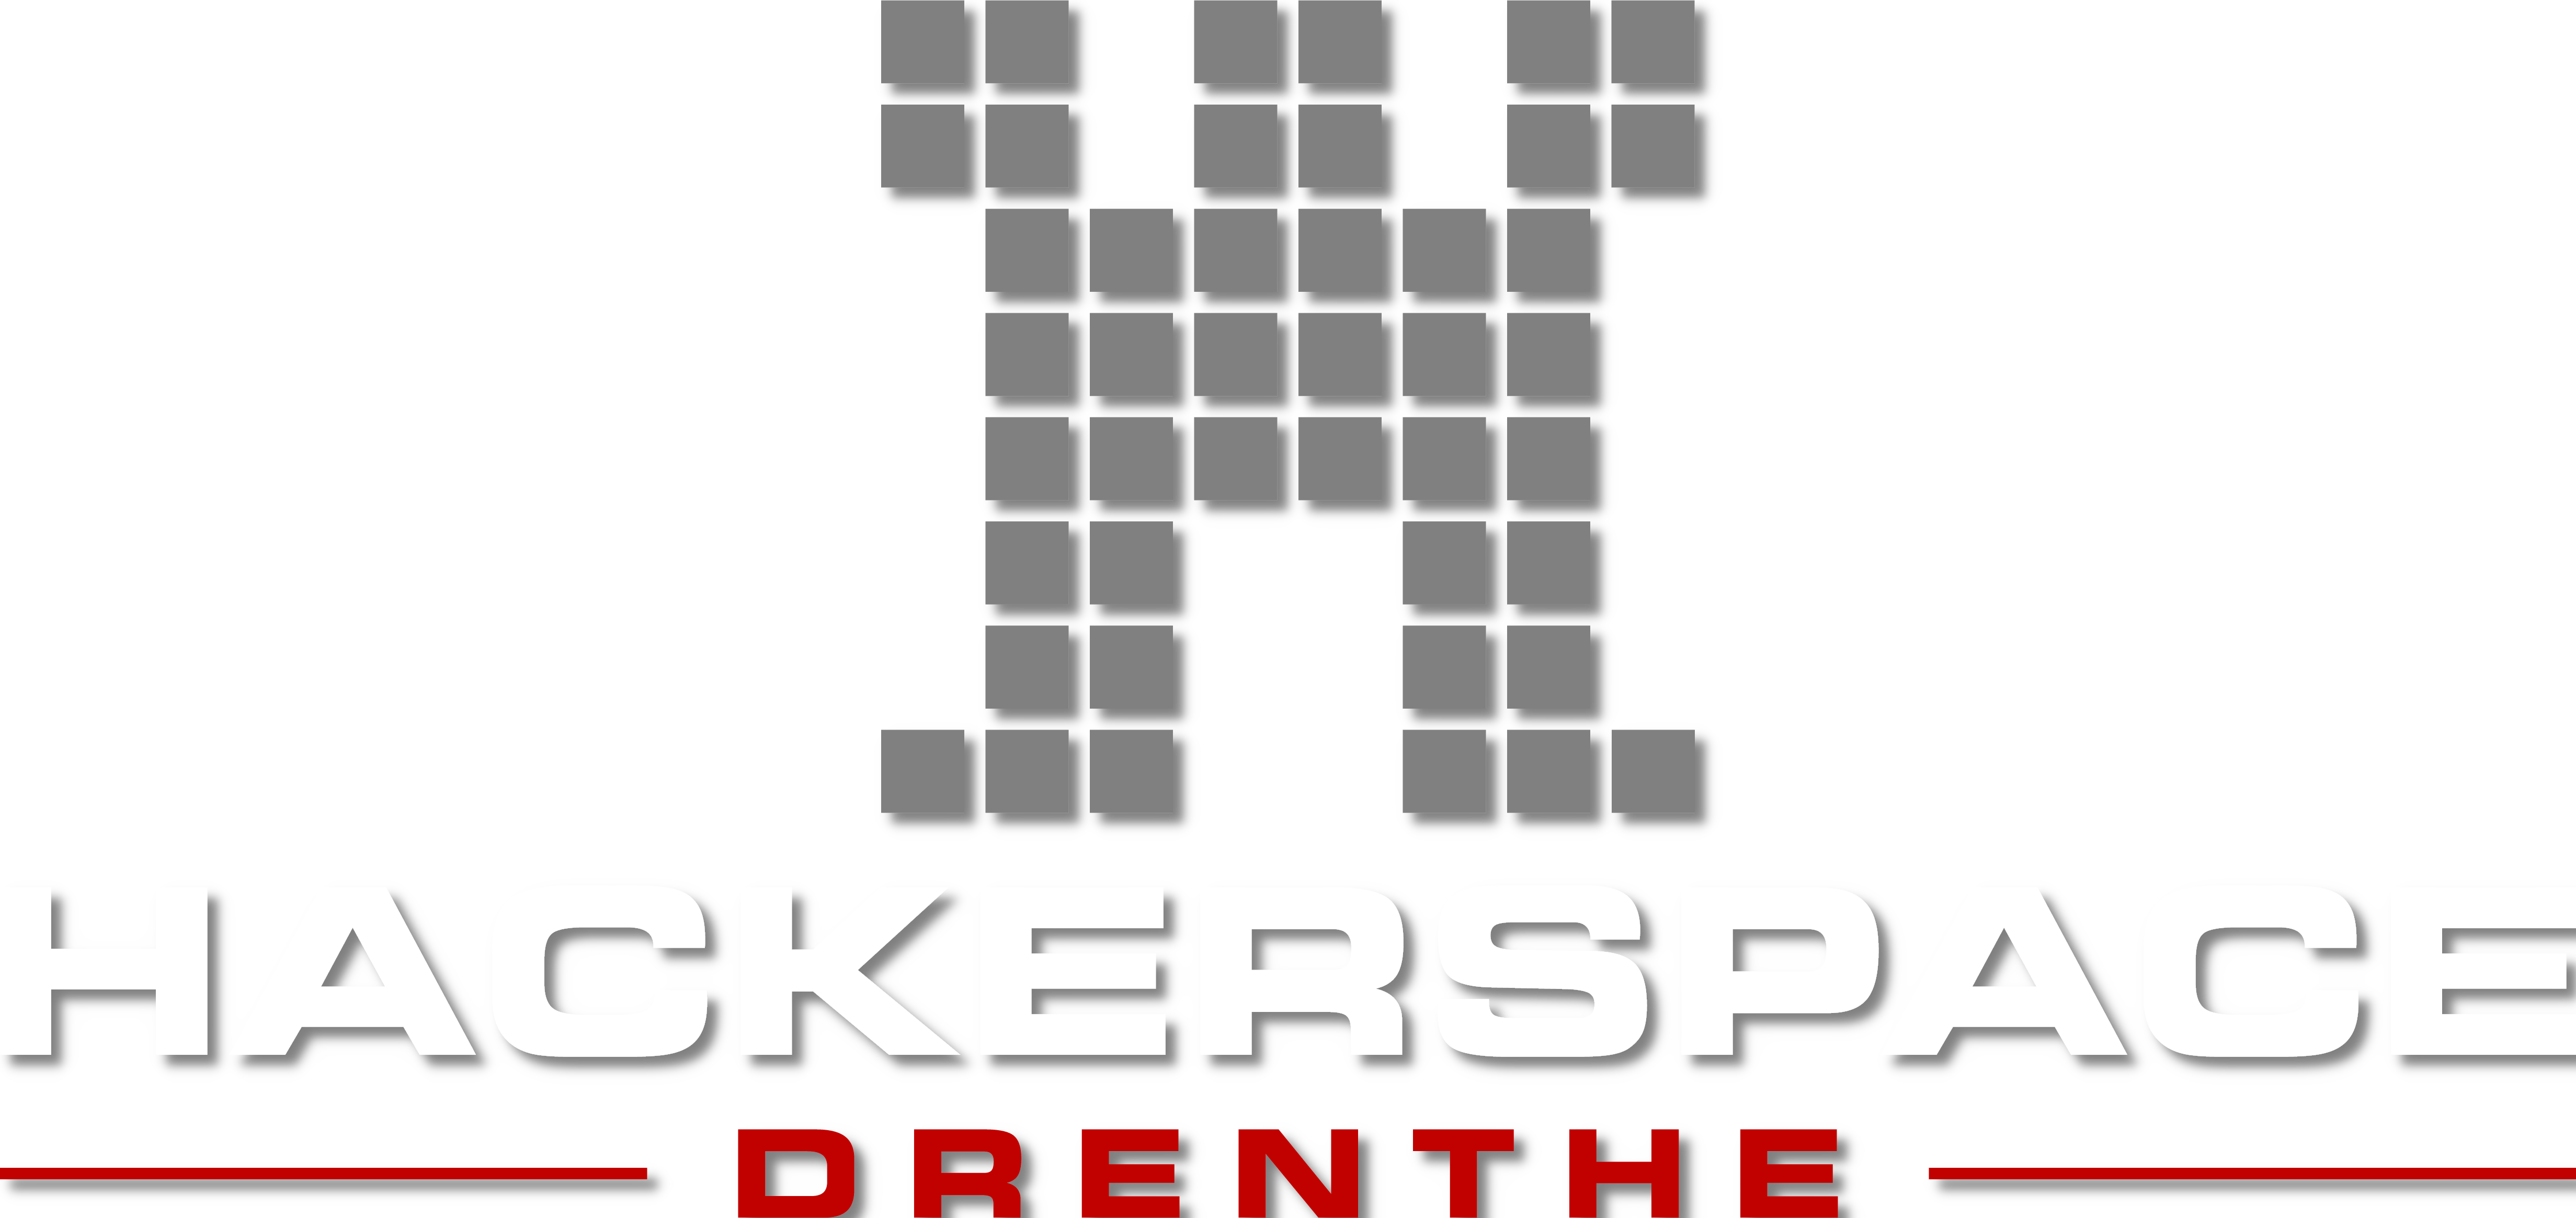 Hackerspace-drenthe-logo.png